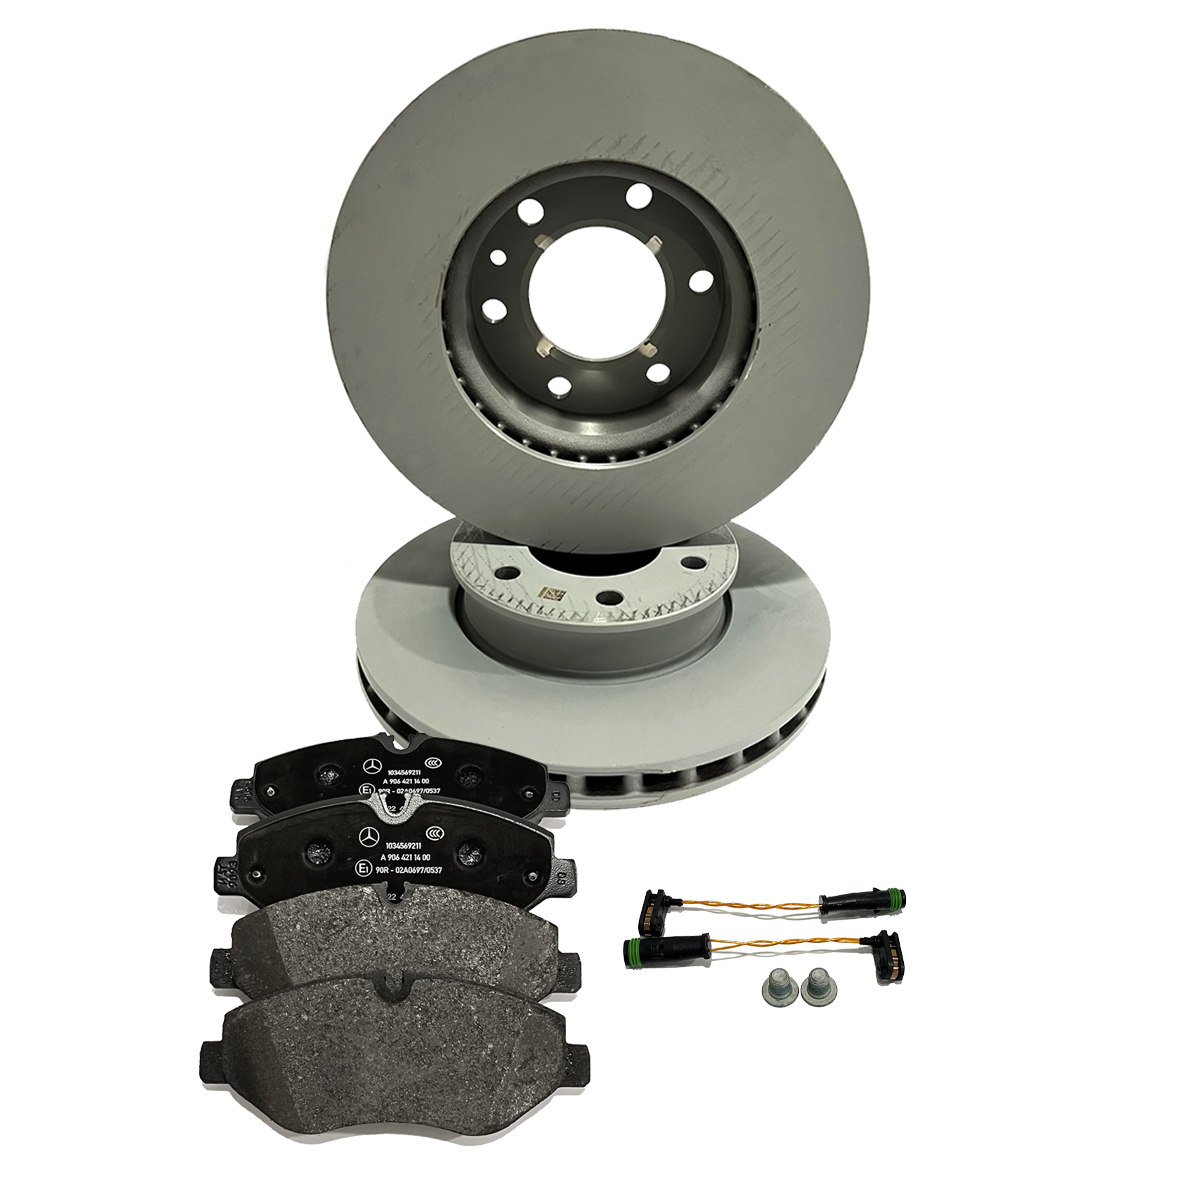 Mercedes-Benz Sprinter Front Brake Pads & Discs Kit - 2 to 4 Tonne